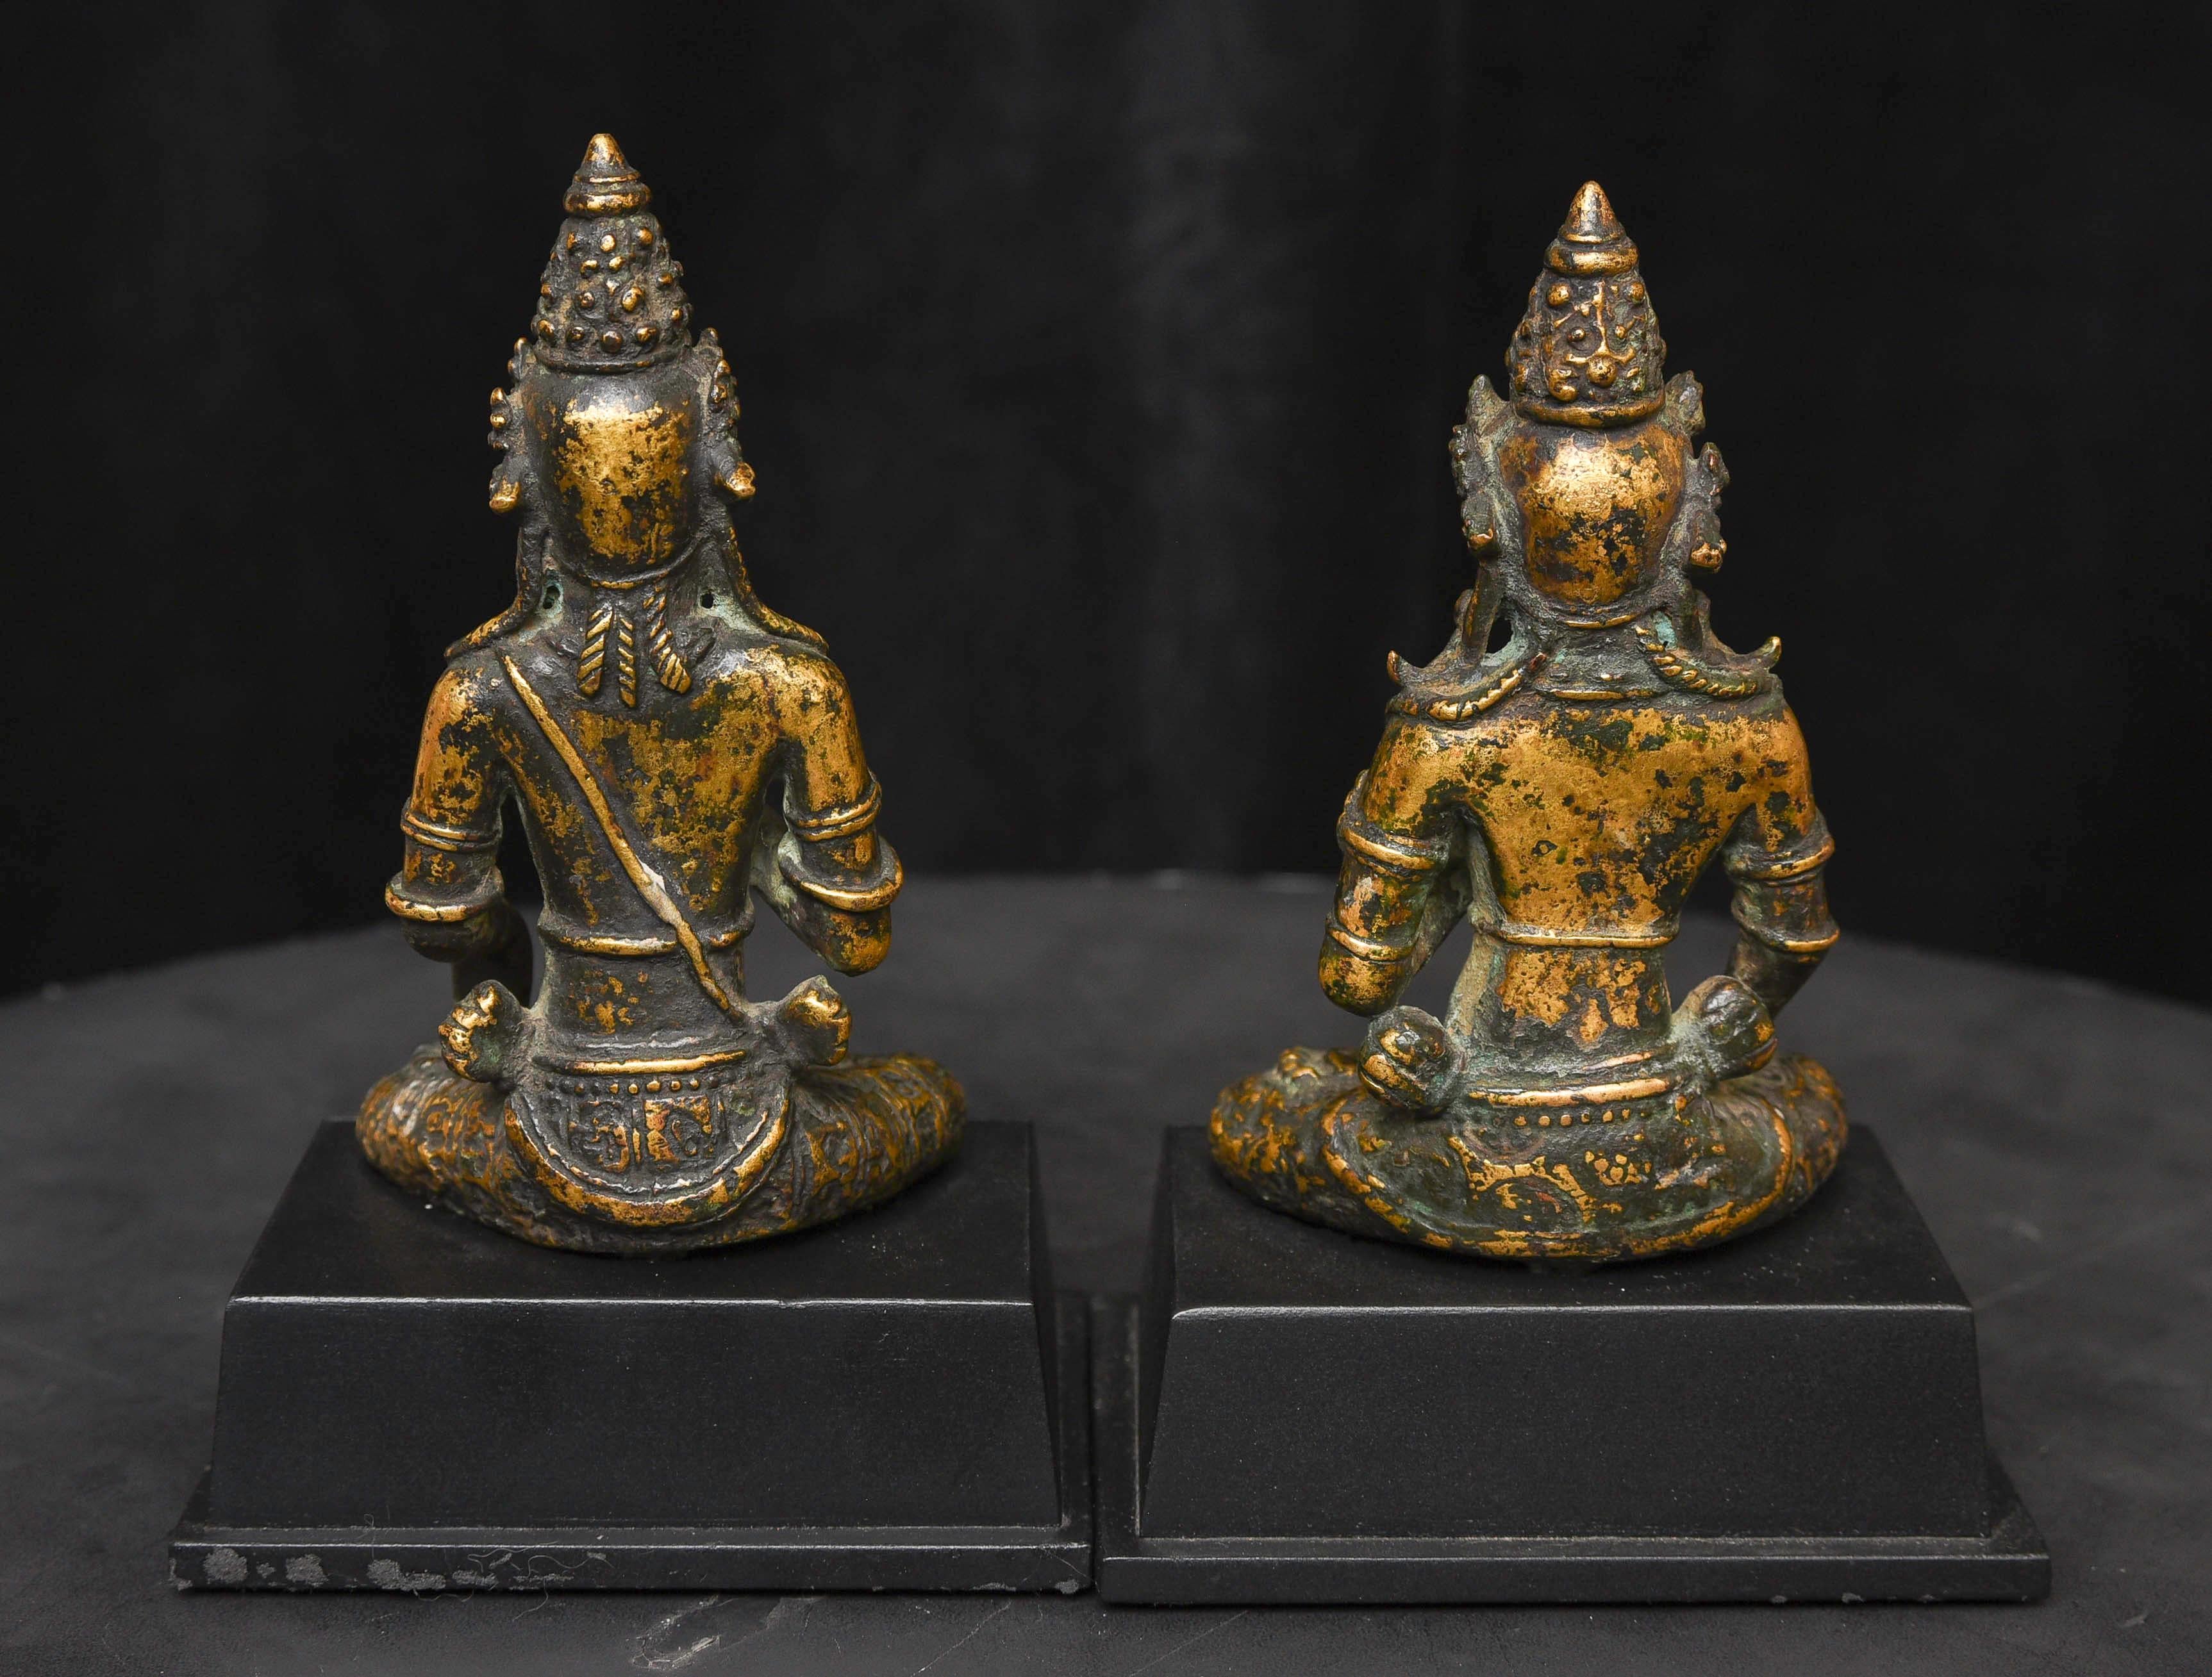 15-19thC Indonesian or Javanese Gilt Bronze Deities - 9591 For Sale 7